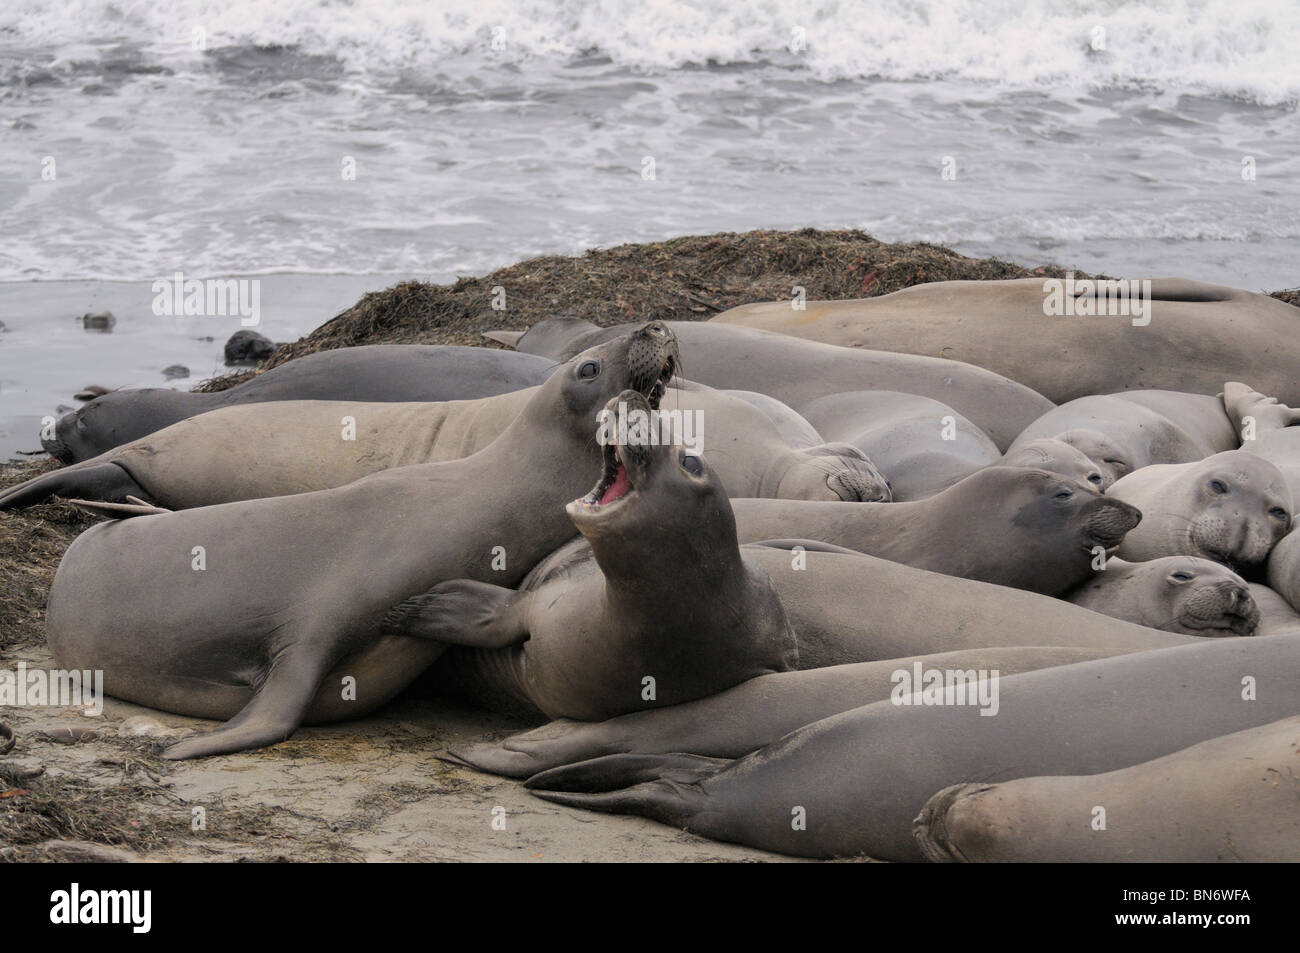 Stock photo of northern elephant seal displaying agressive behavior. Stock Photo